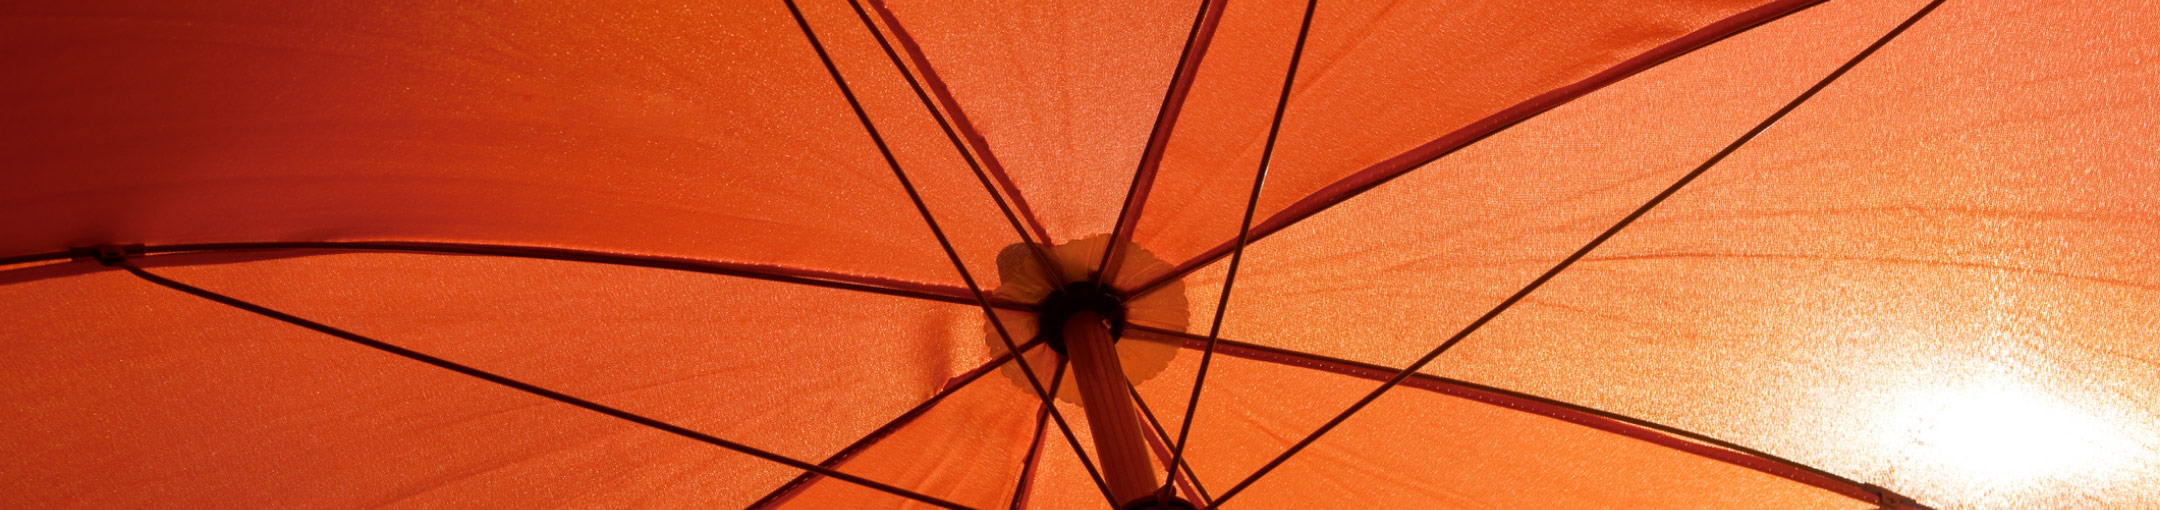 The inside of an opened orange umbrella